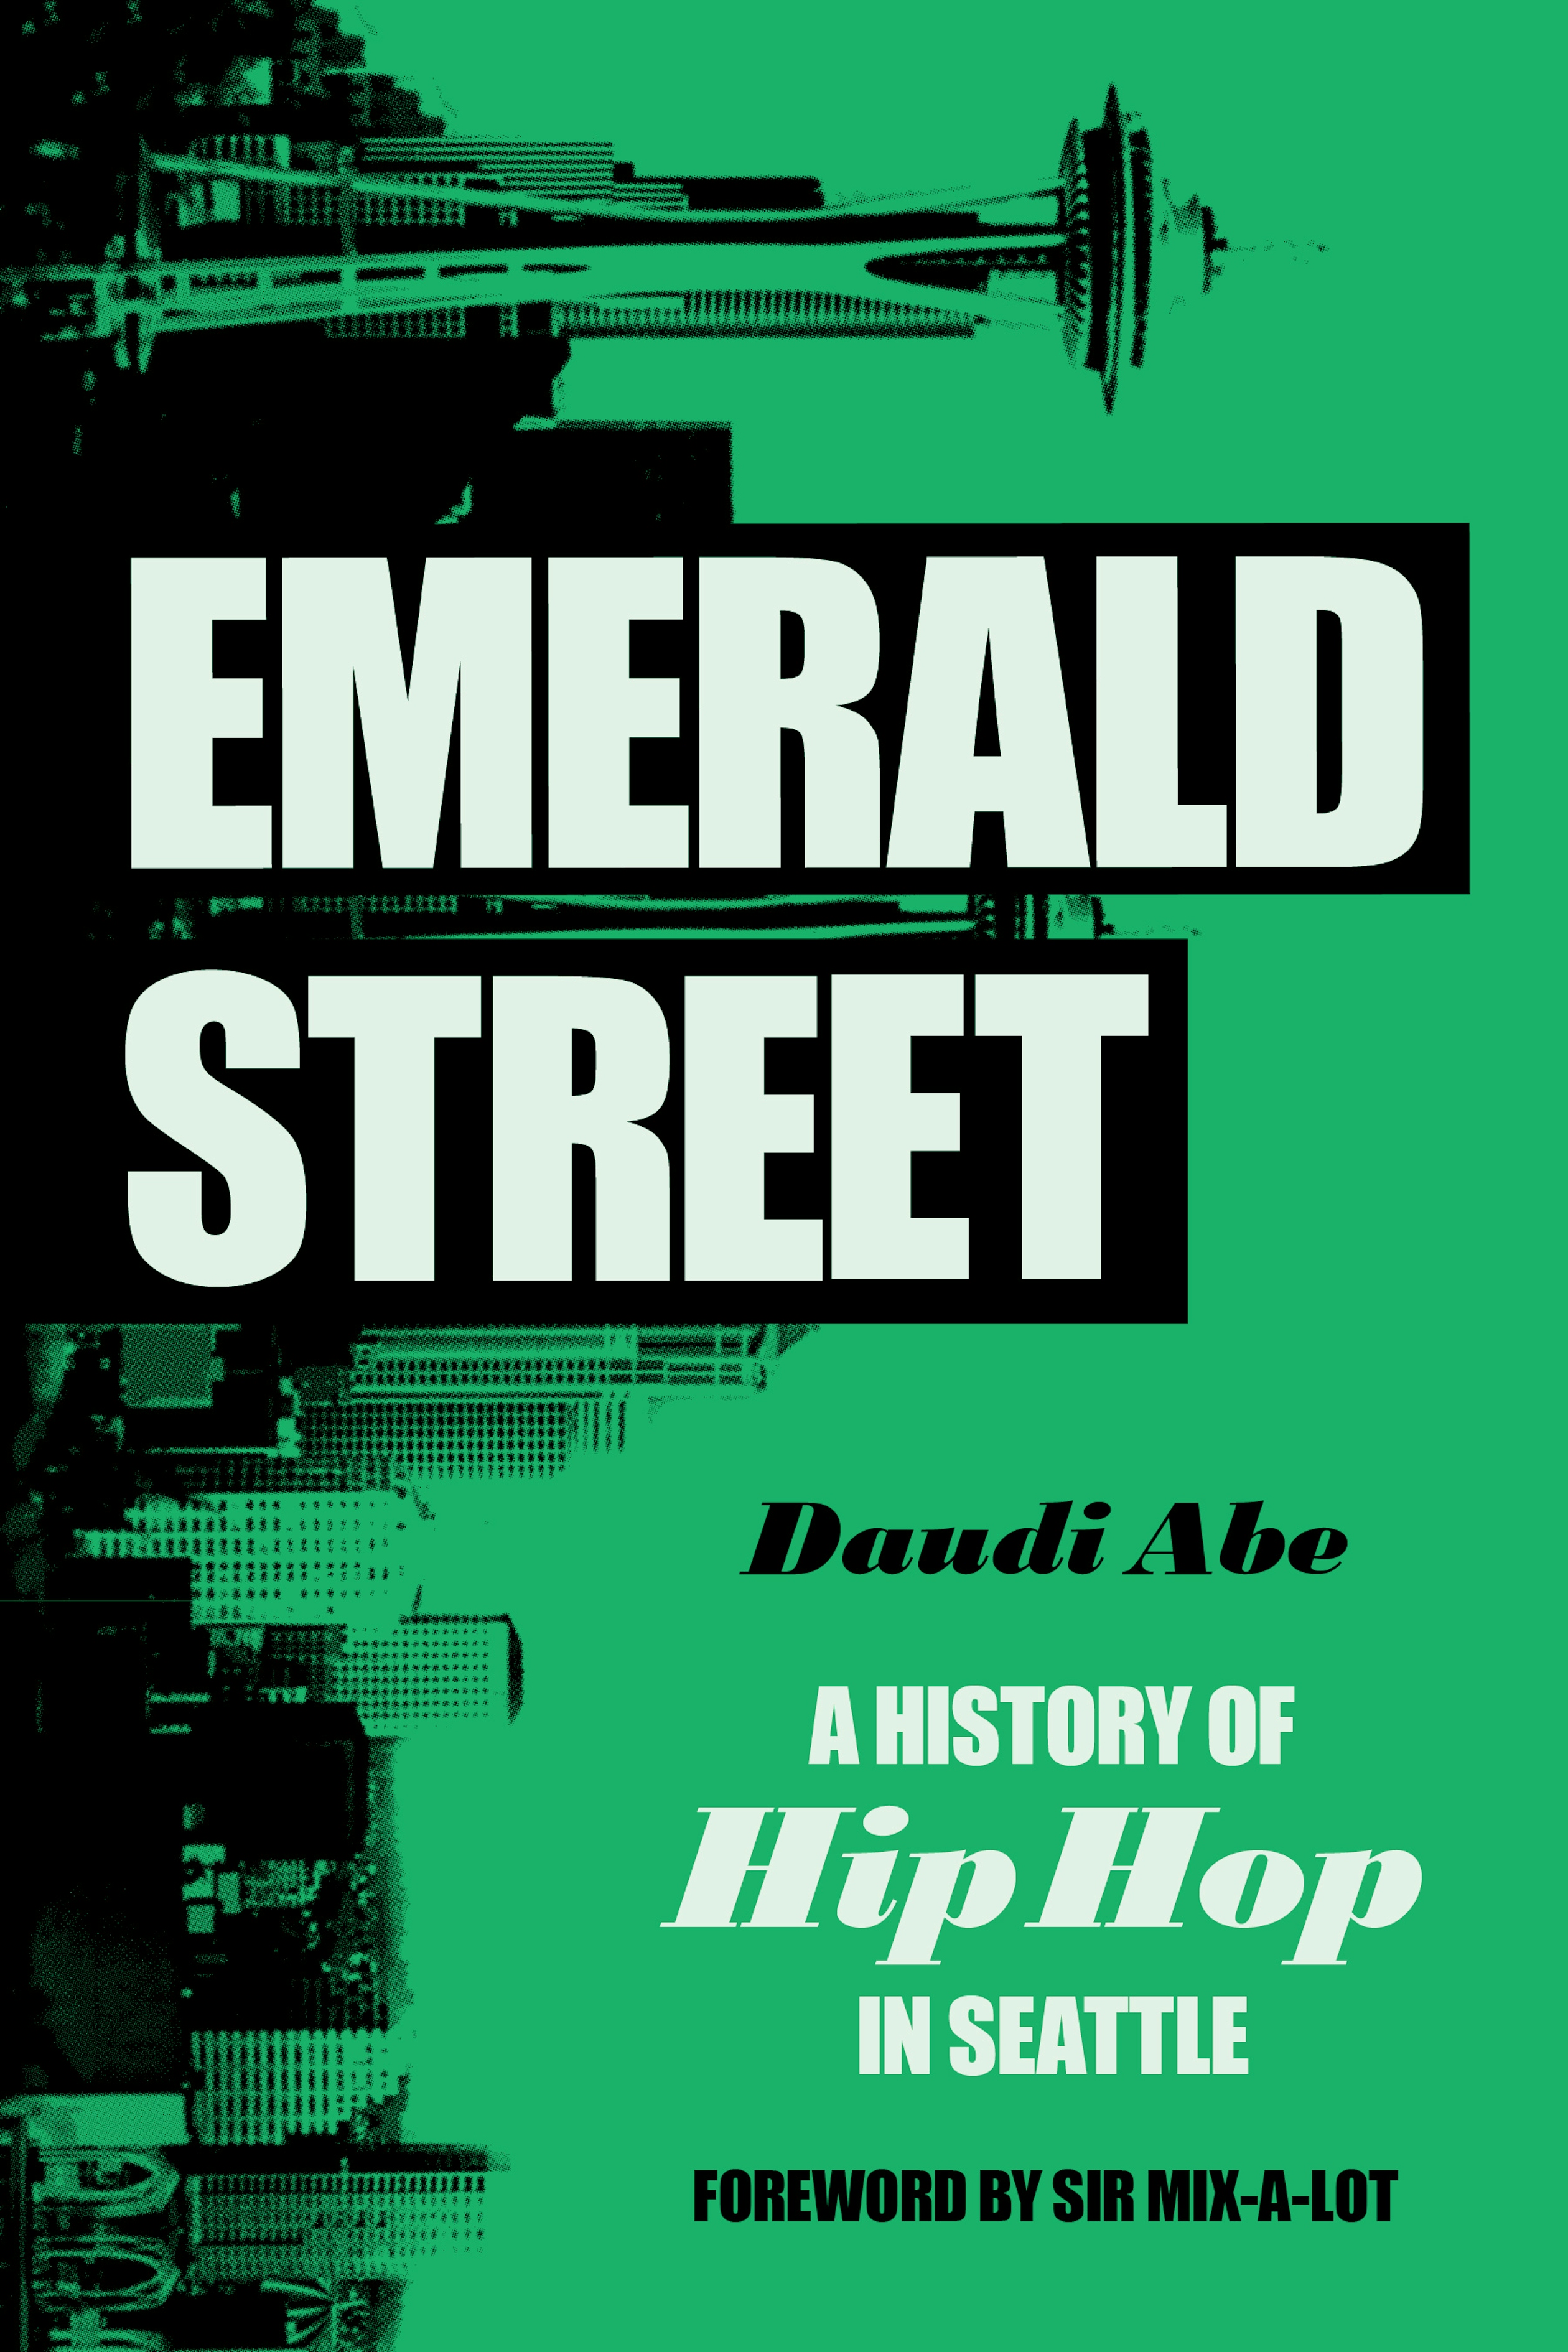 Emerald Street